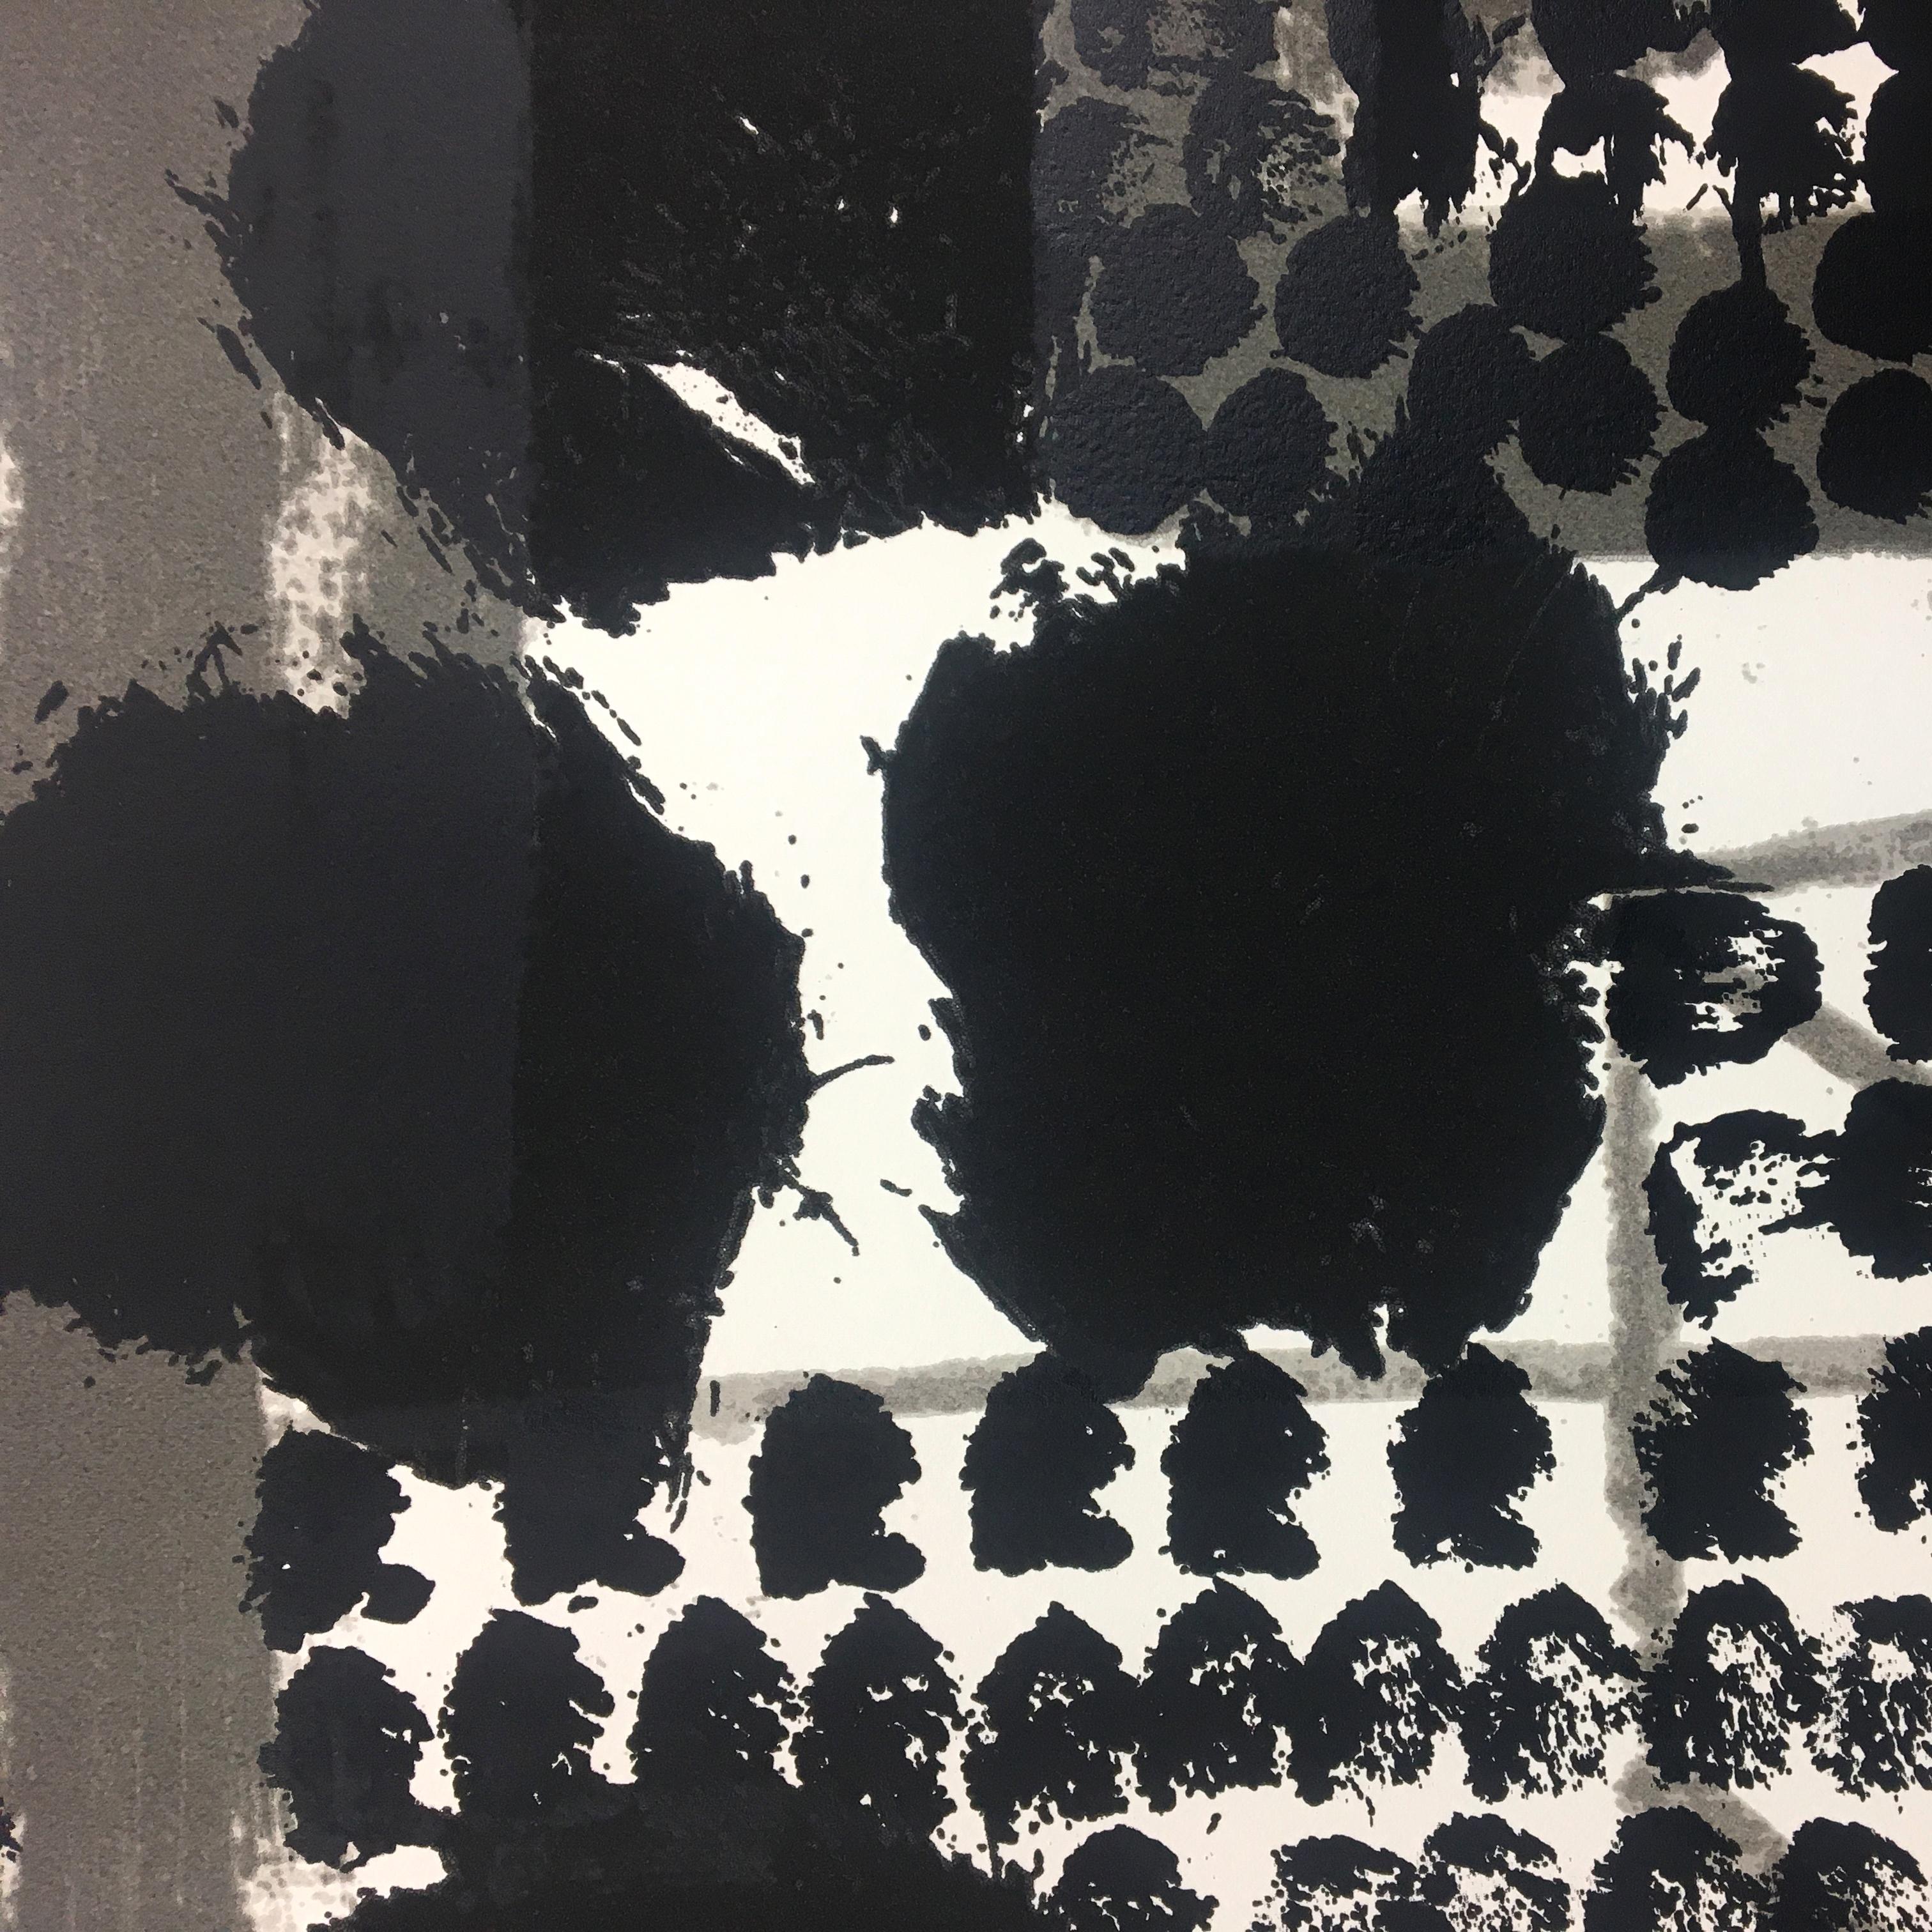 Souvenir, Howard Hodgkin: large scale black white gray abstract interior scene  4